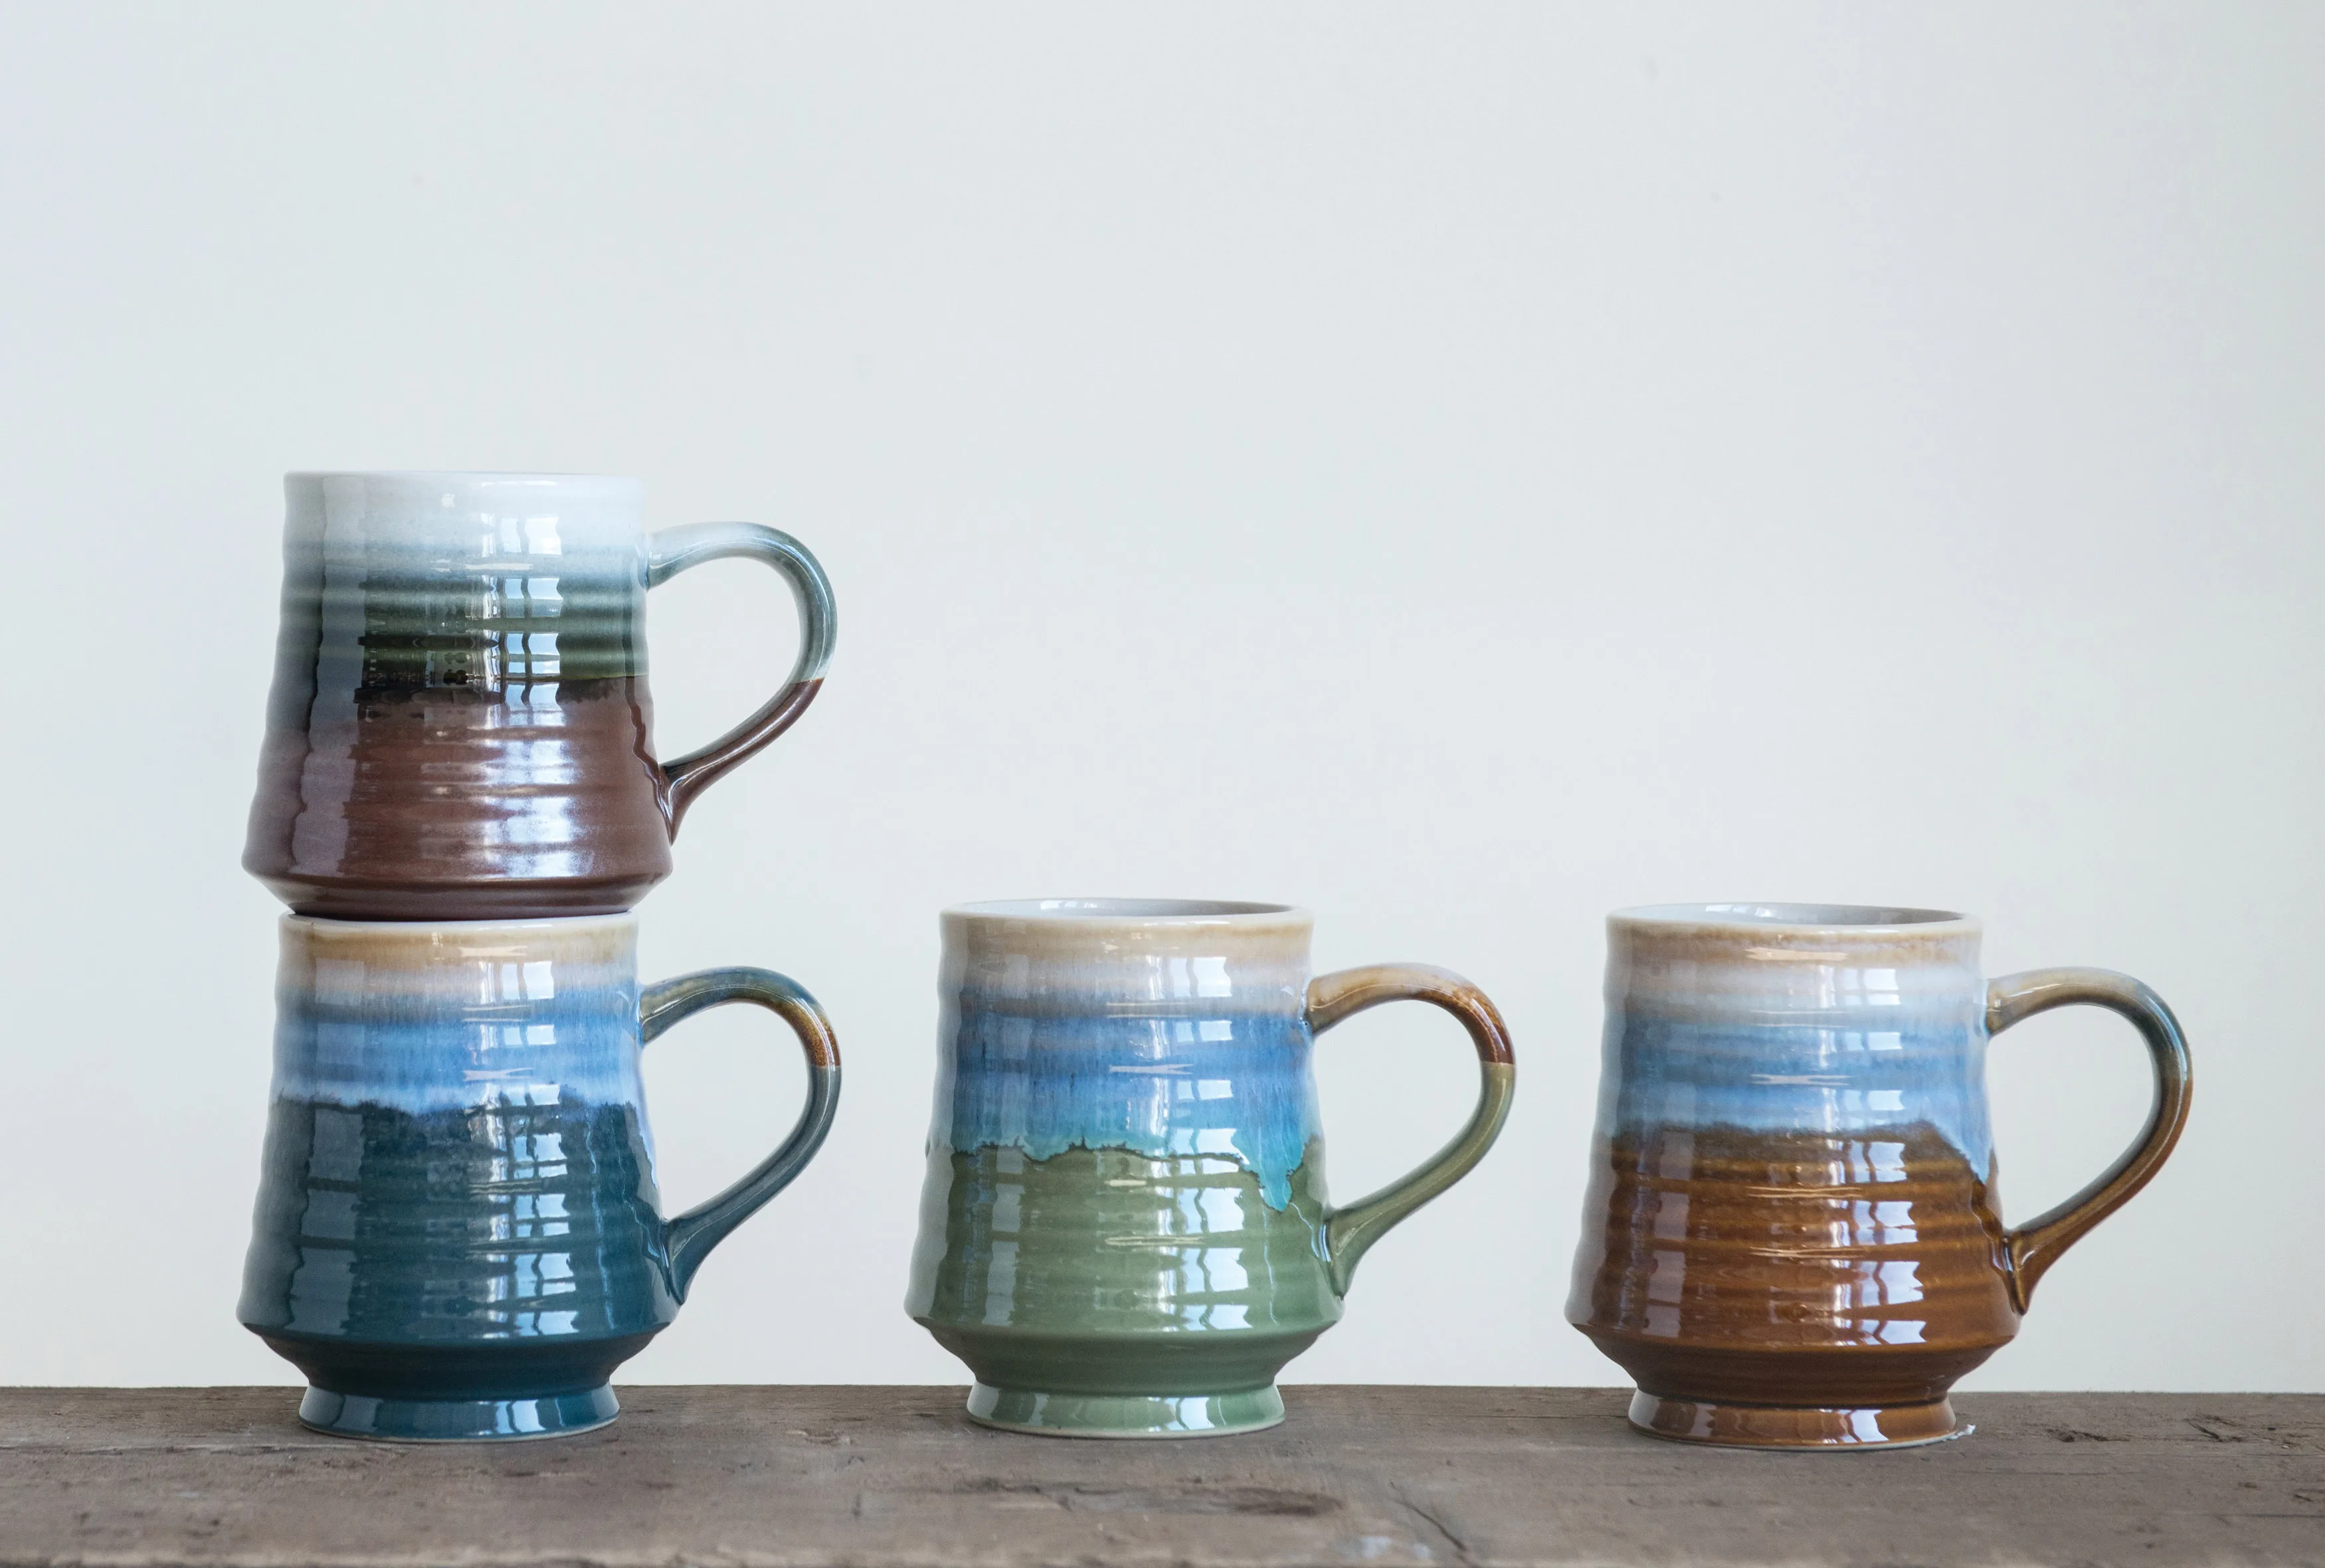 Creative Co-op Stoneware, Set of 4 Styles Mug, Multicolored